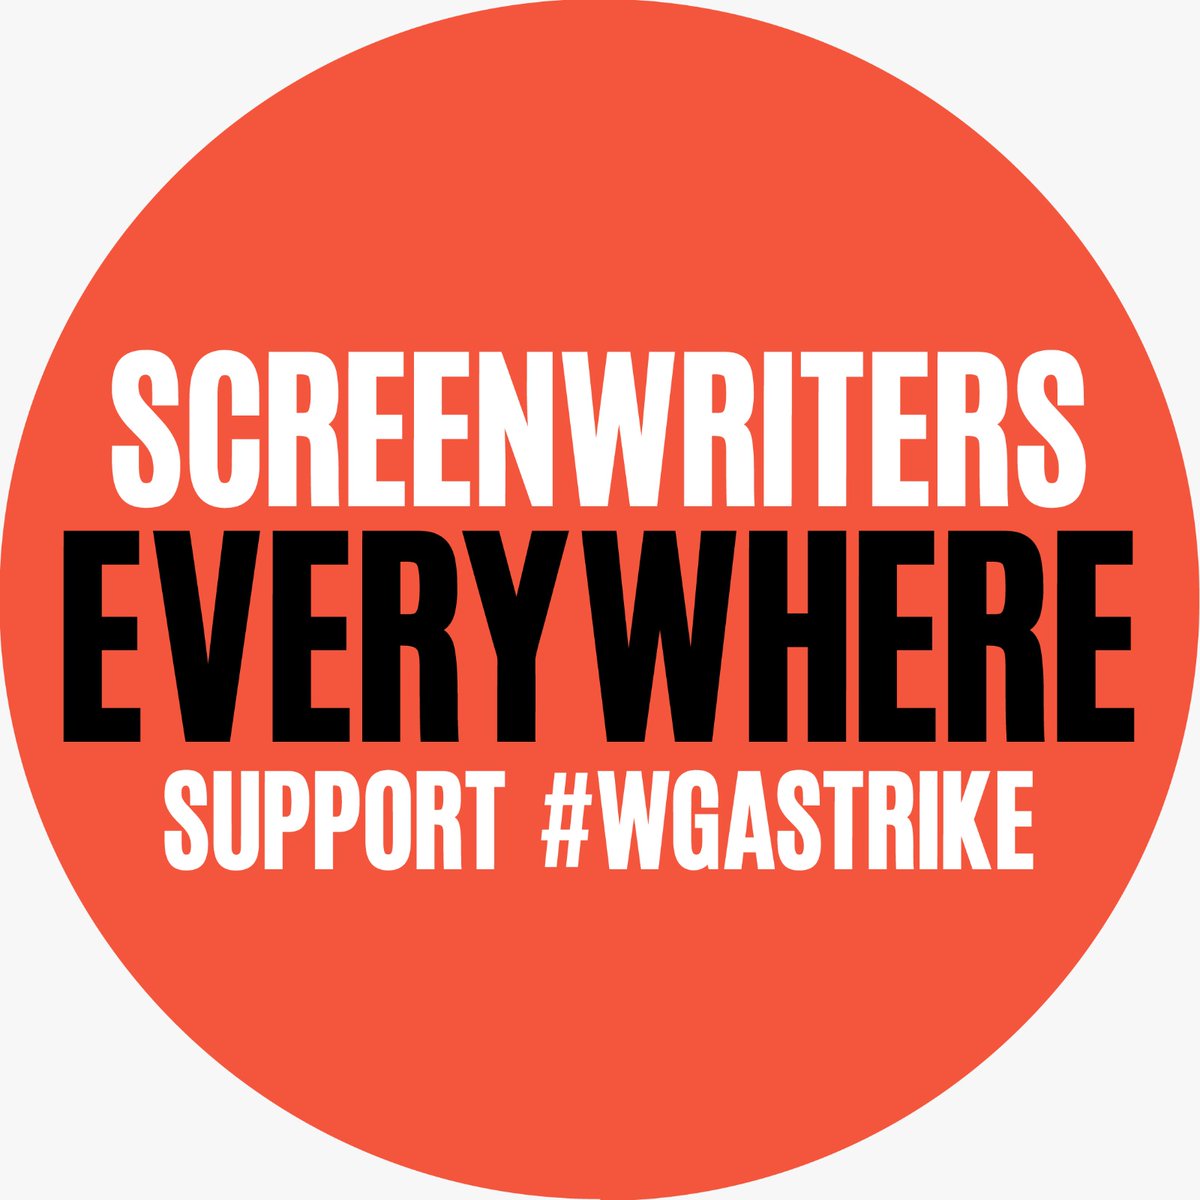 #Screenwriterseverywhere
#WGAStrike 
#WGAStrong
#Guionistasenespañol
#Noseescribensolas